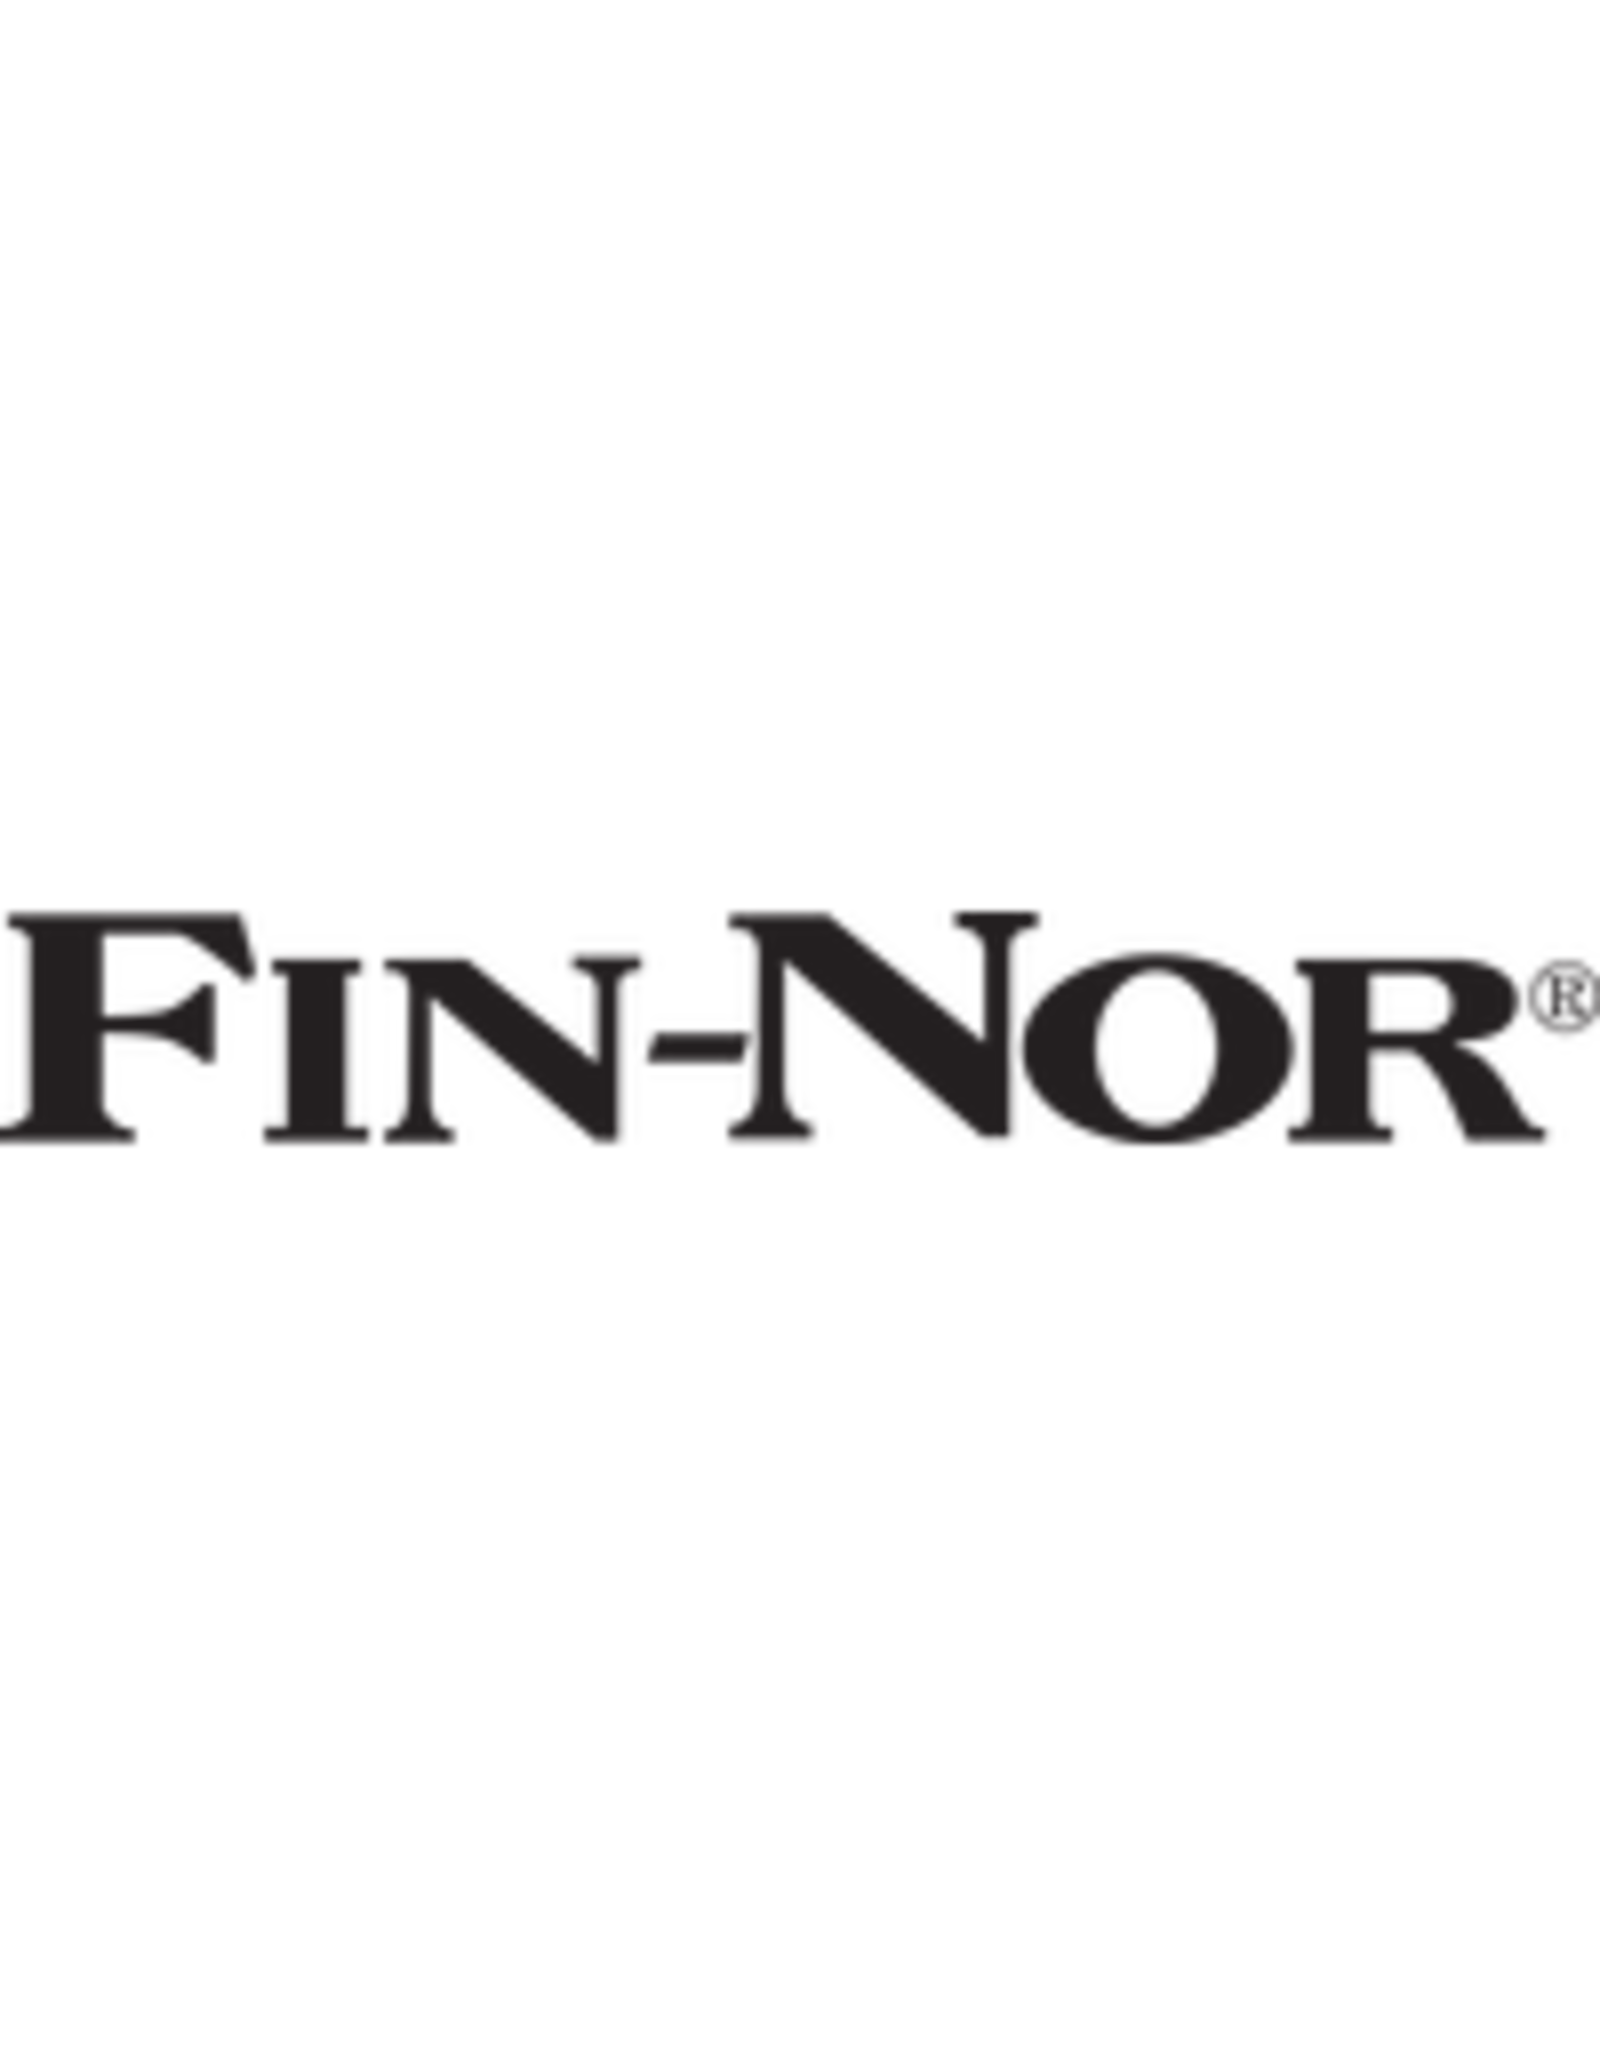 Fin-Nor WAD016-01 BEARING